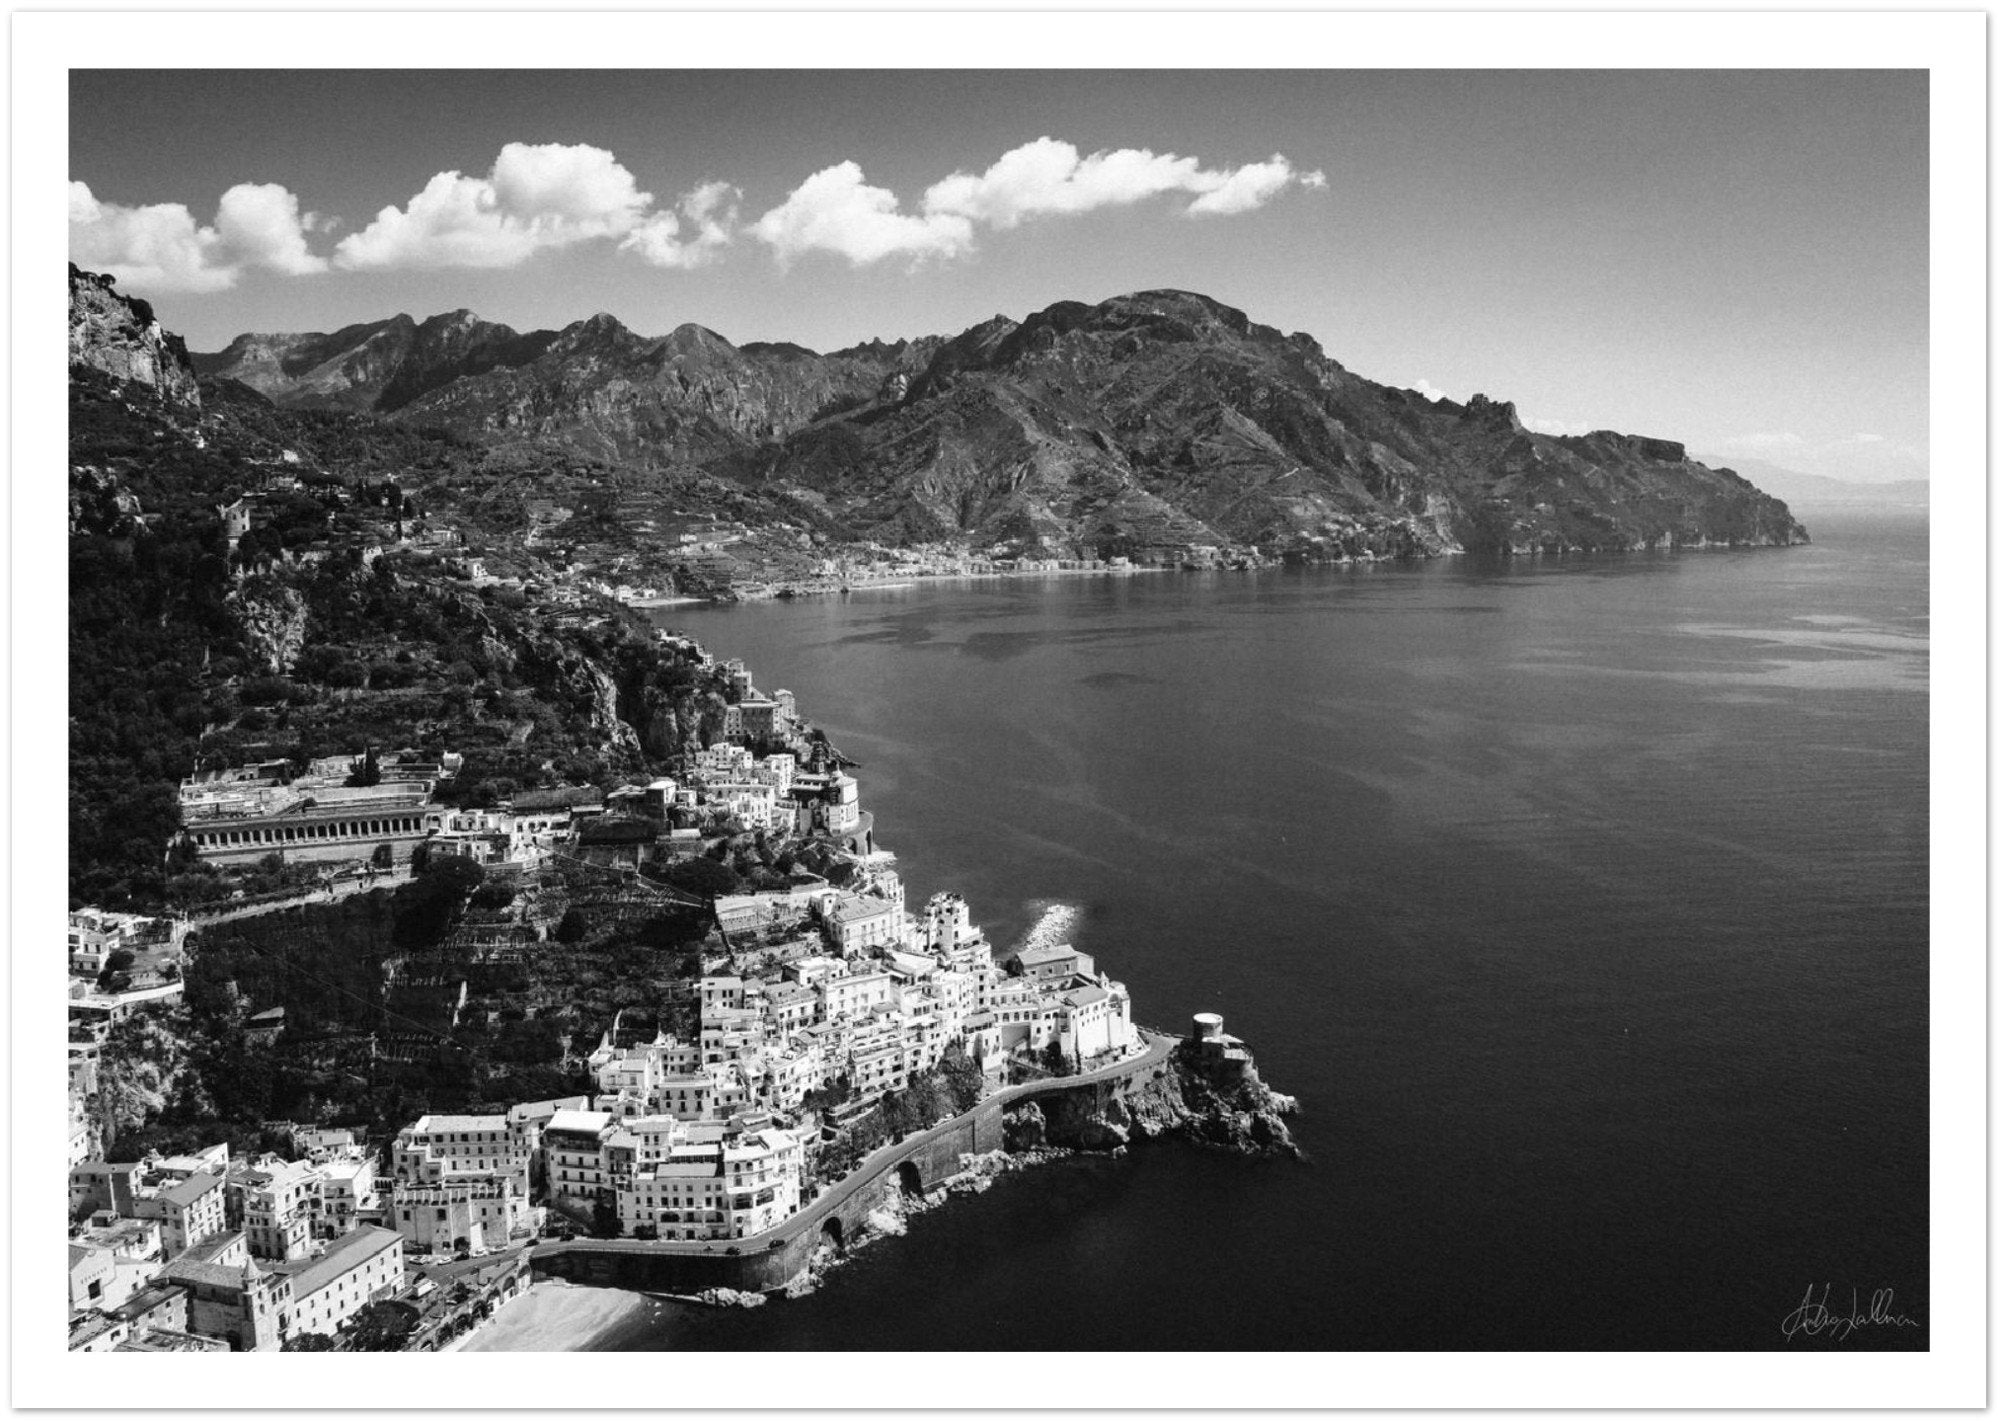 Amalfi Coast Aerial View B&W Premium Semi-Glossy Print